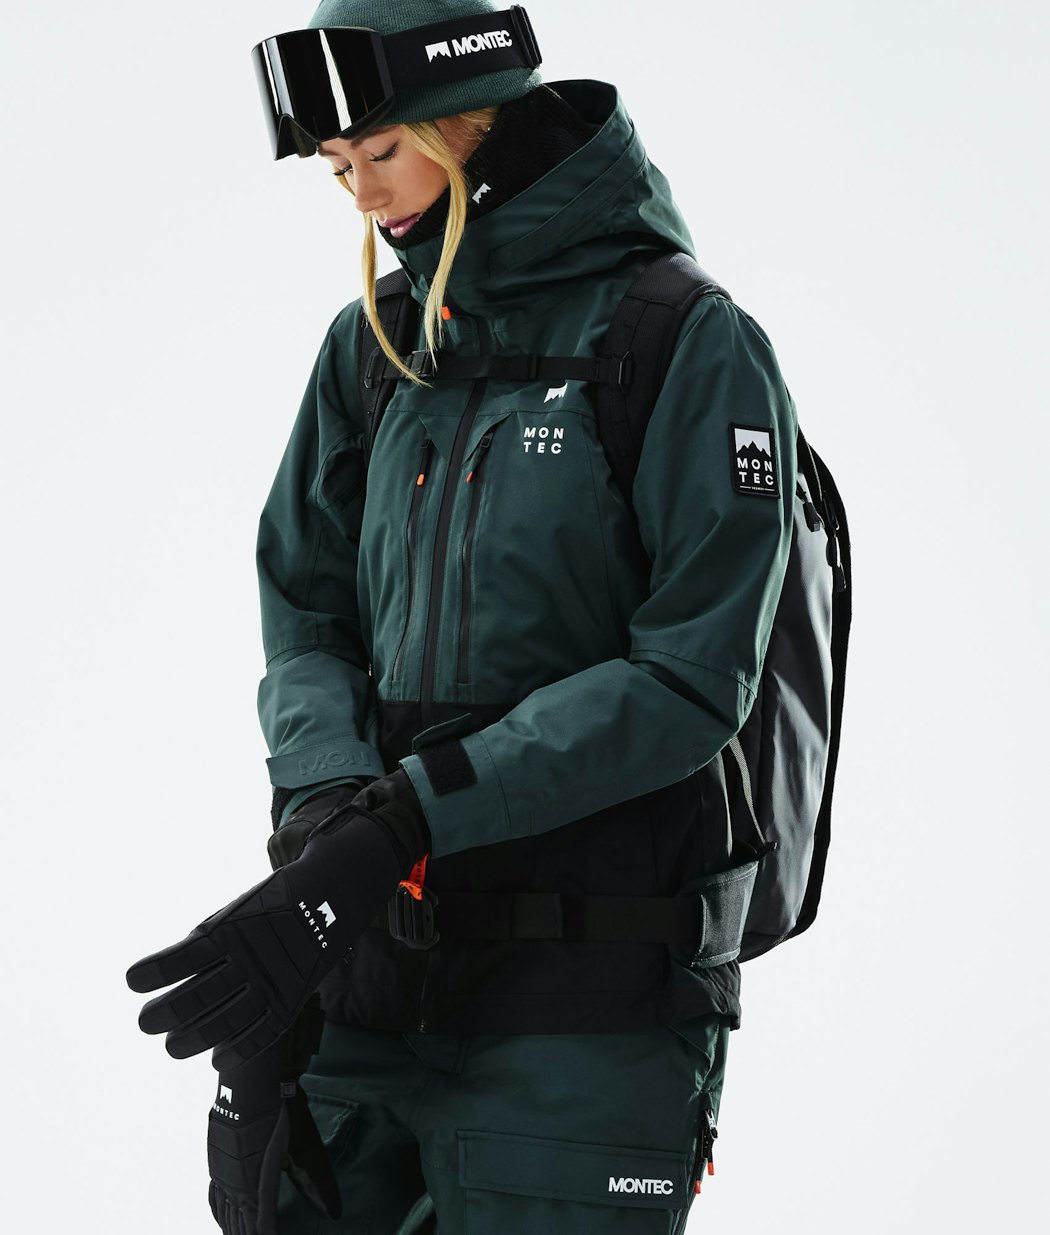 Moss W 2021 Veste Snowboard Femme Dark Atlantic/Black